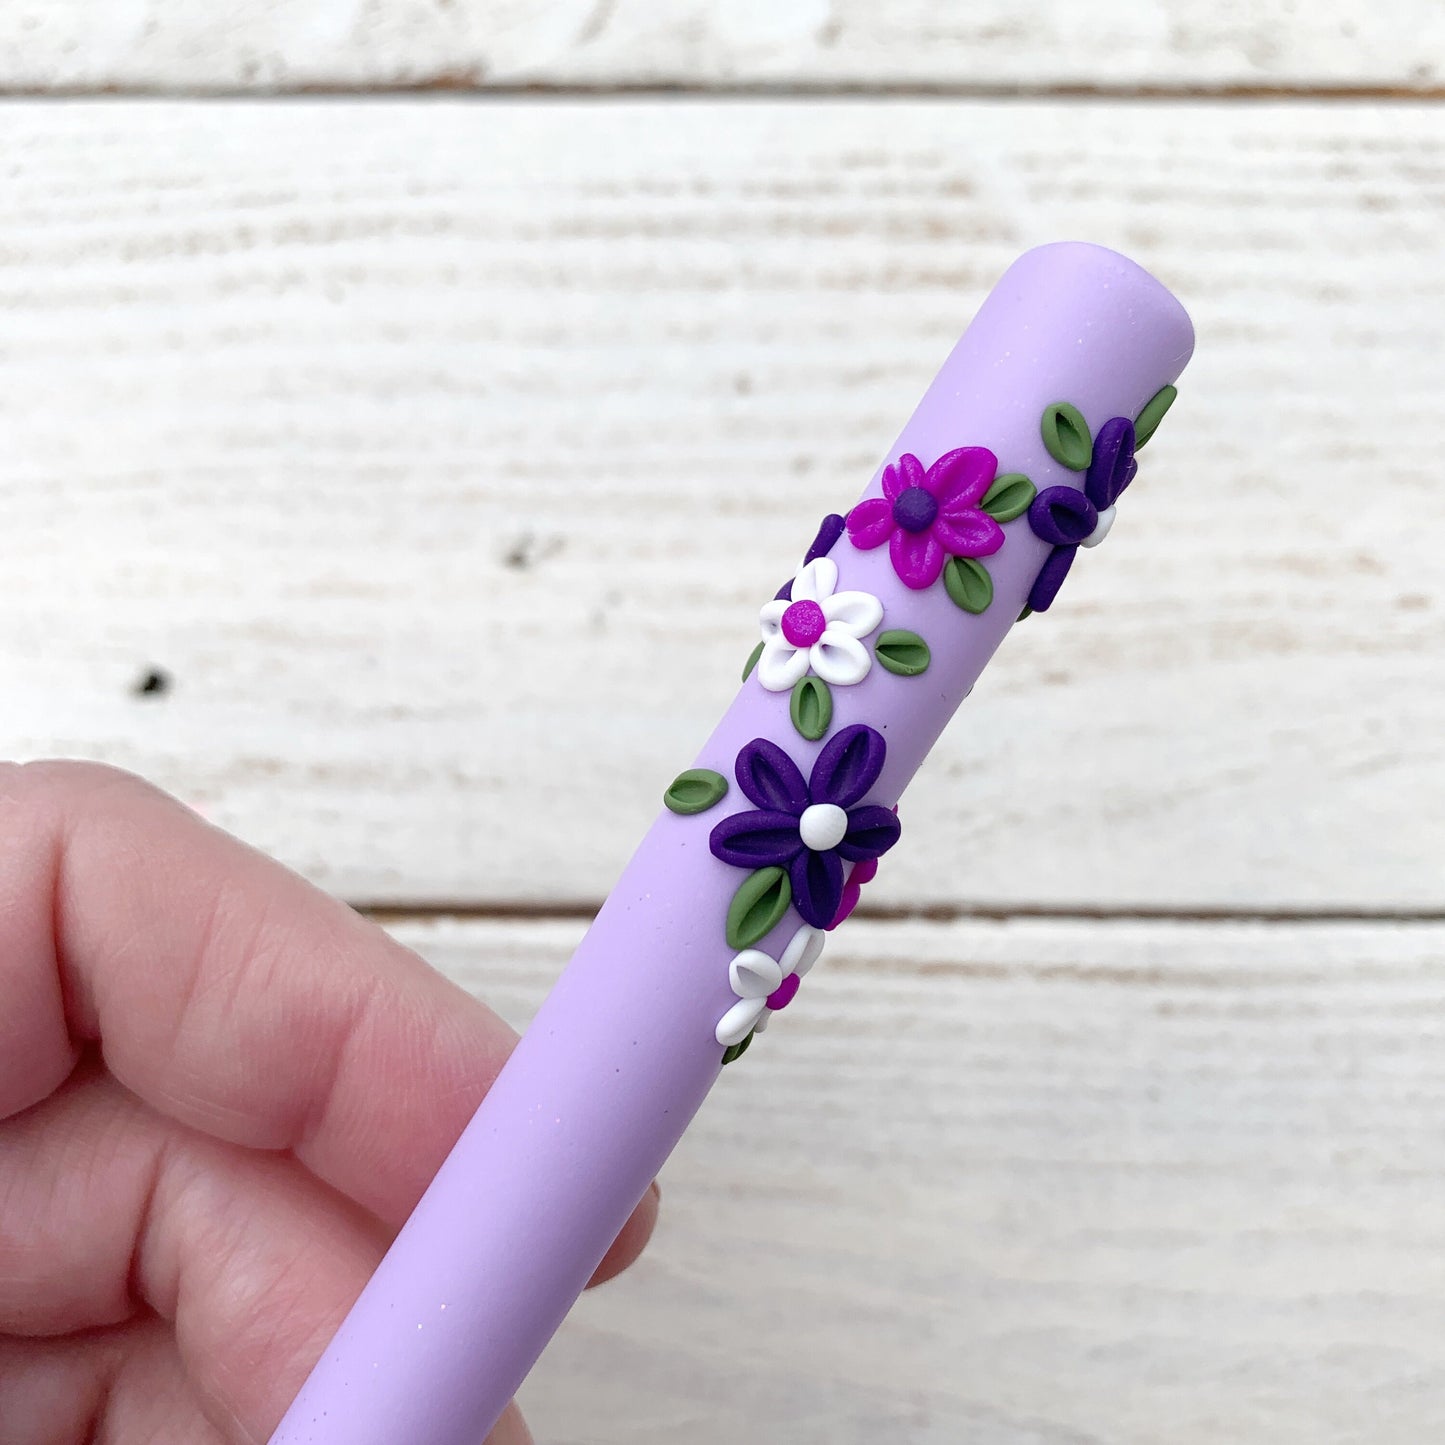 Purple flower appliqué crochet hook, handmade flower polymer clay crochet hook, crochet tools, gift for her, rainbow hooks